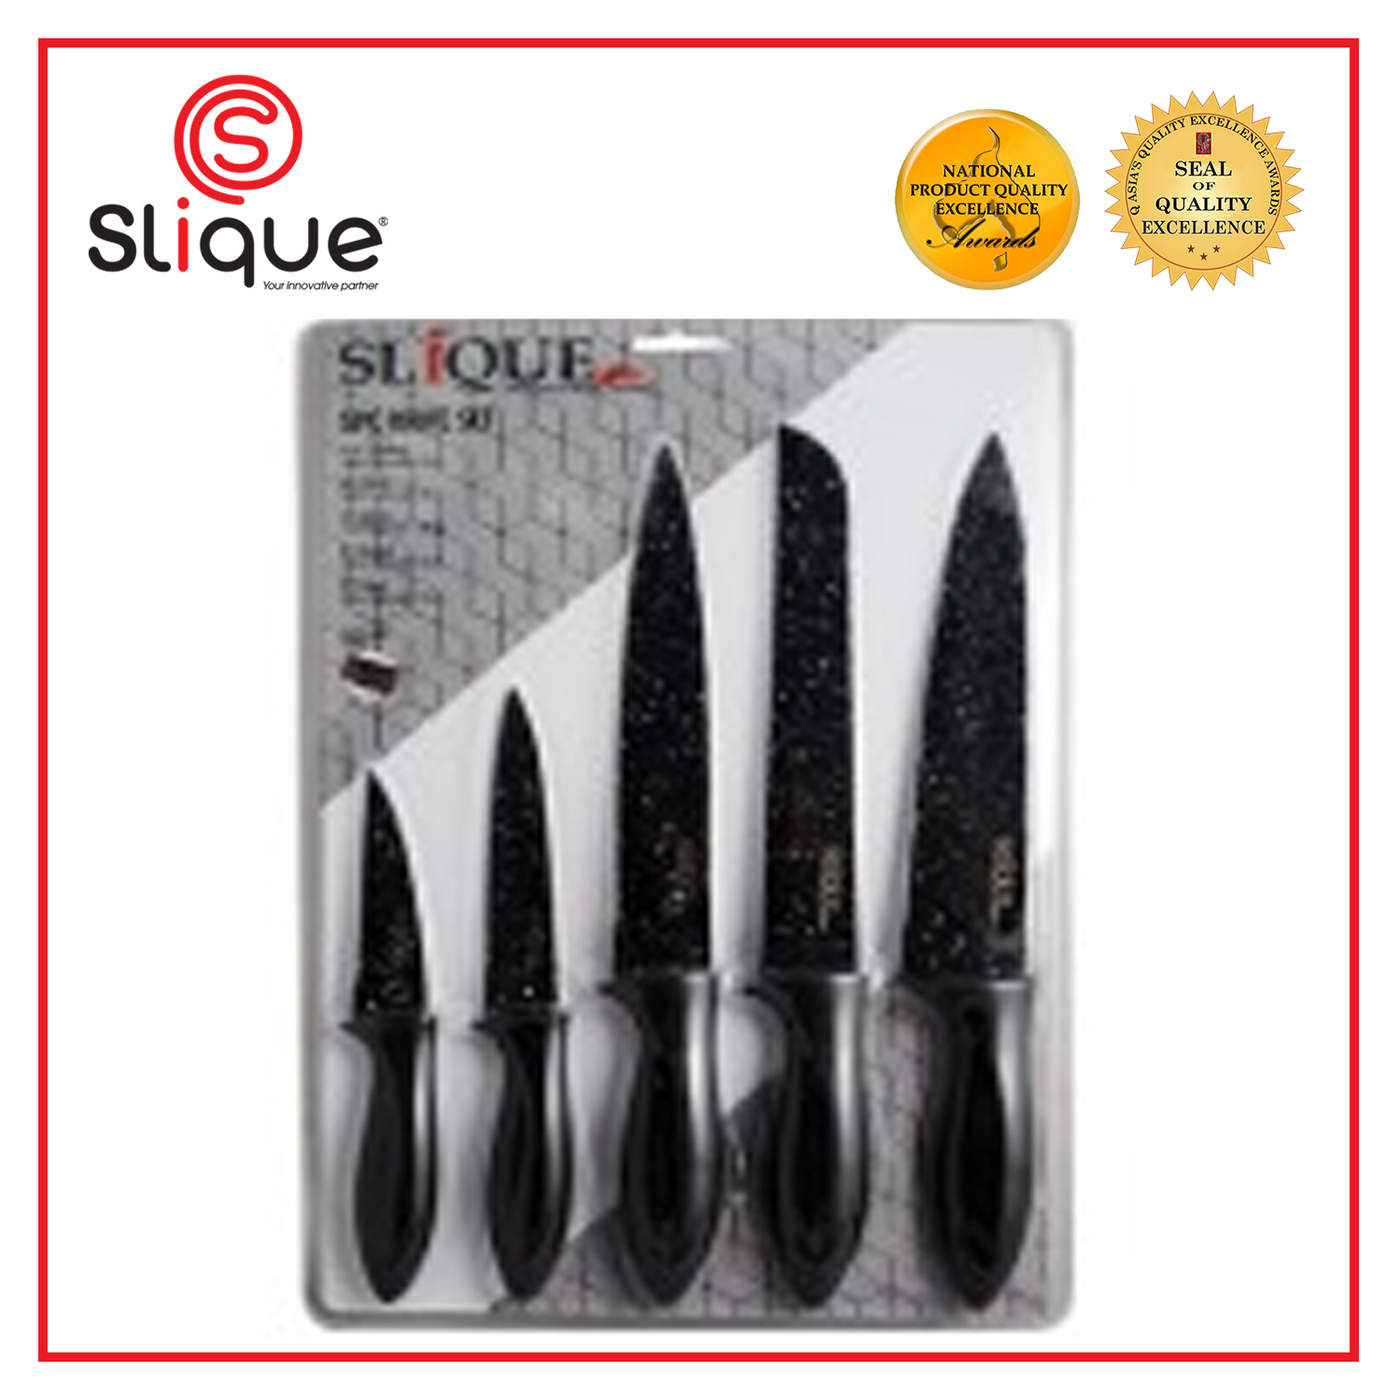 SLIQUE Premium Stainless Steel Non-Stick Kitchen Knife Set of 5 (Black)